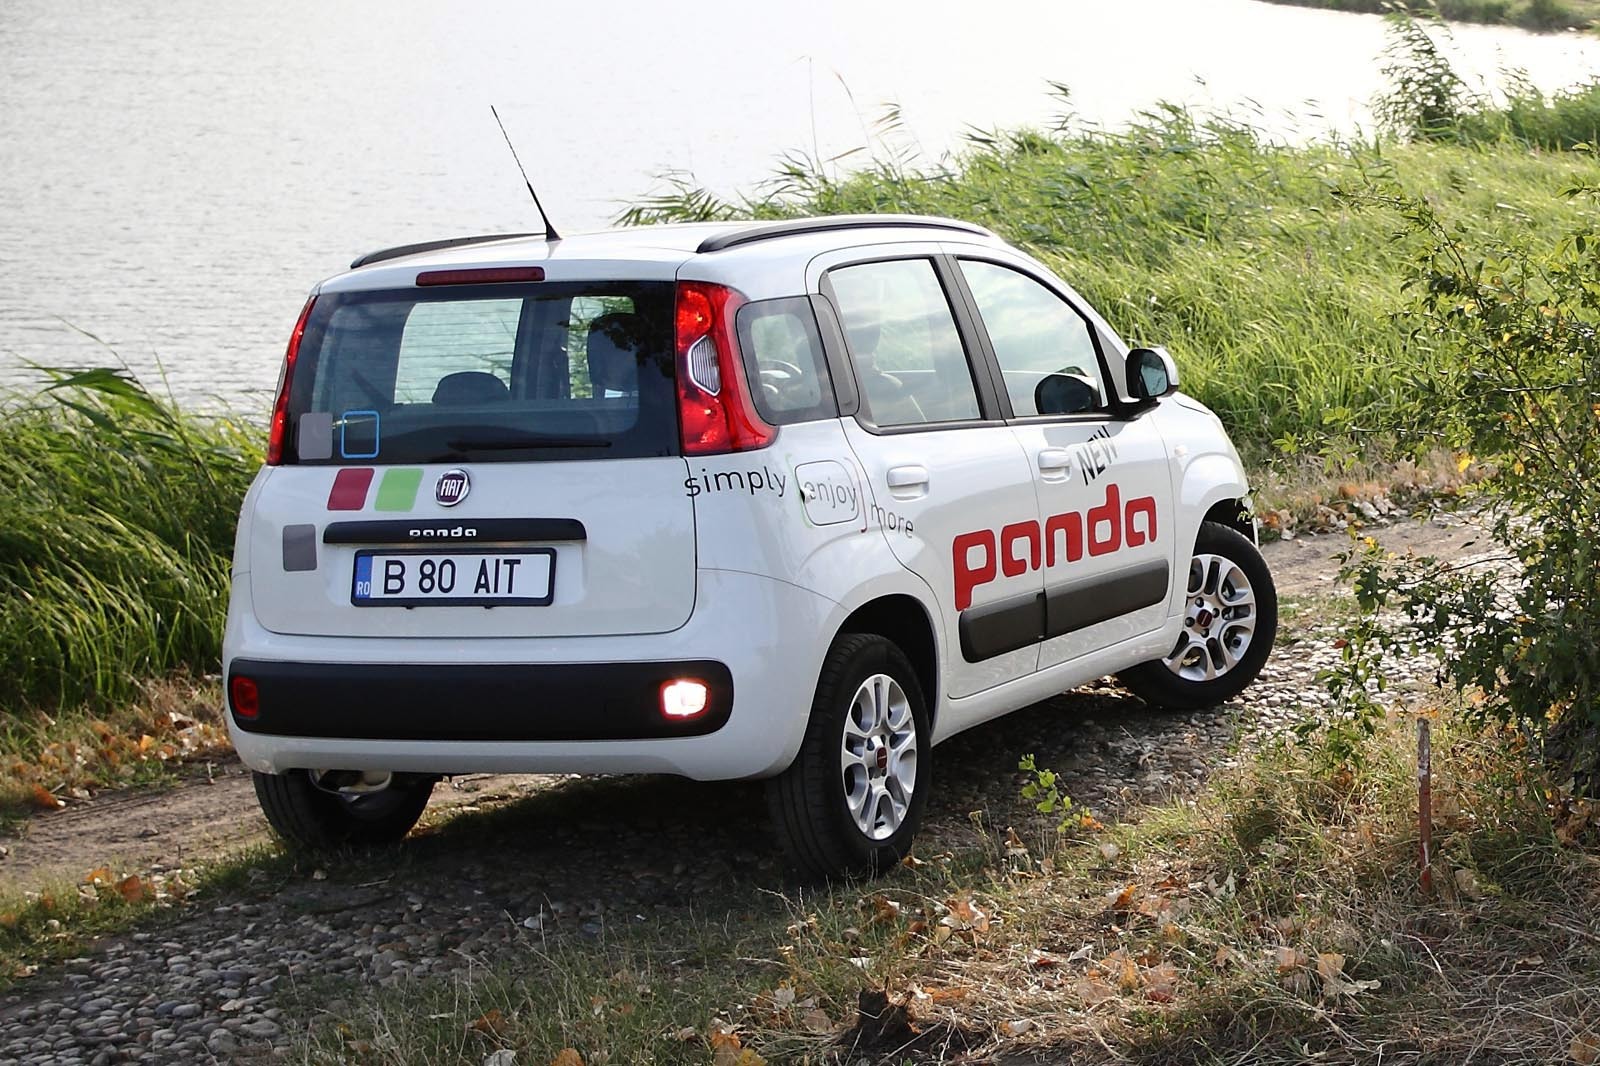 Acelasi stil, dar noul Fiat Panda pune accentul pe rotunjimi in locul muchiilor